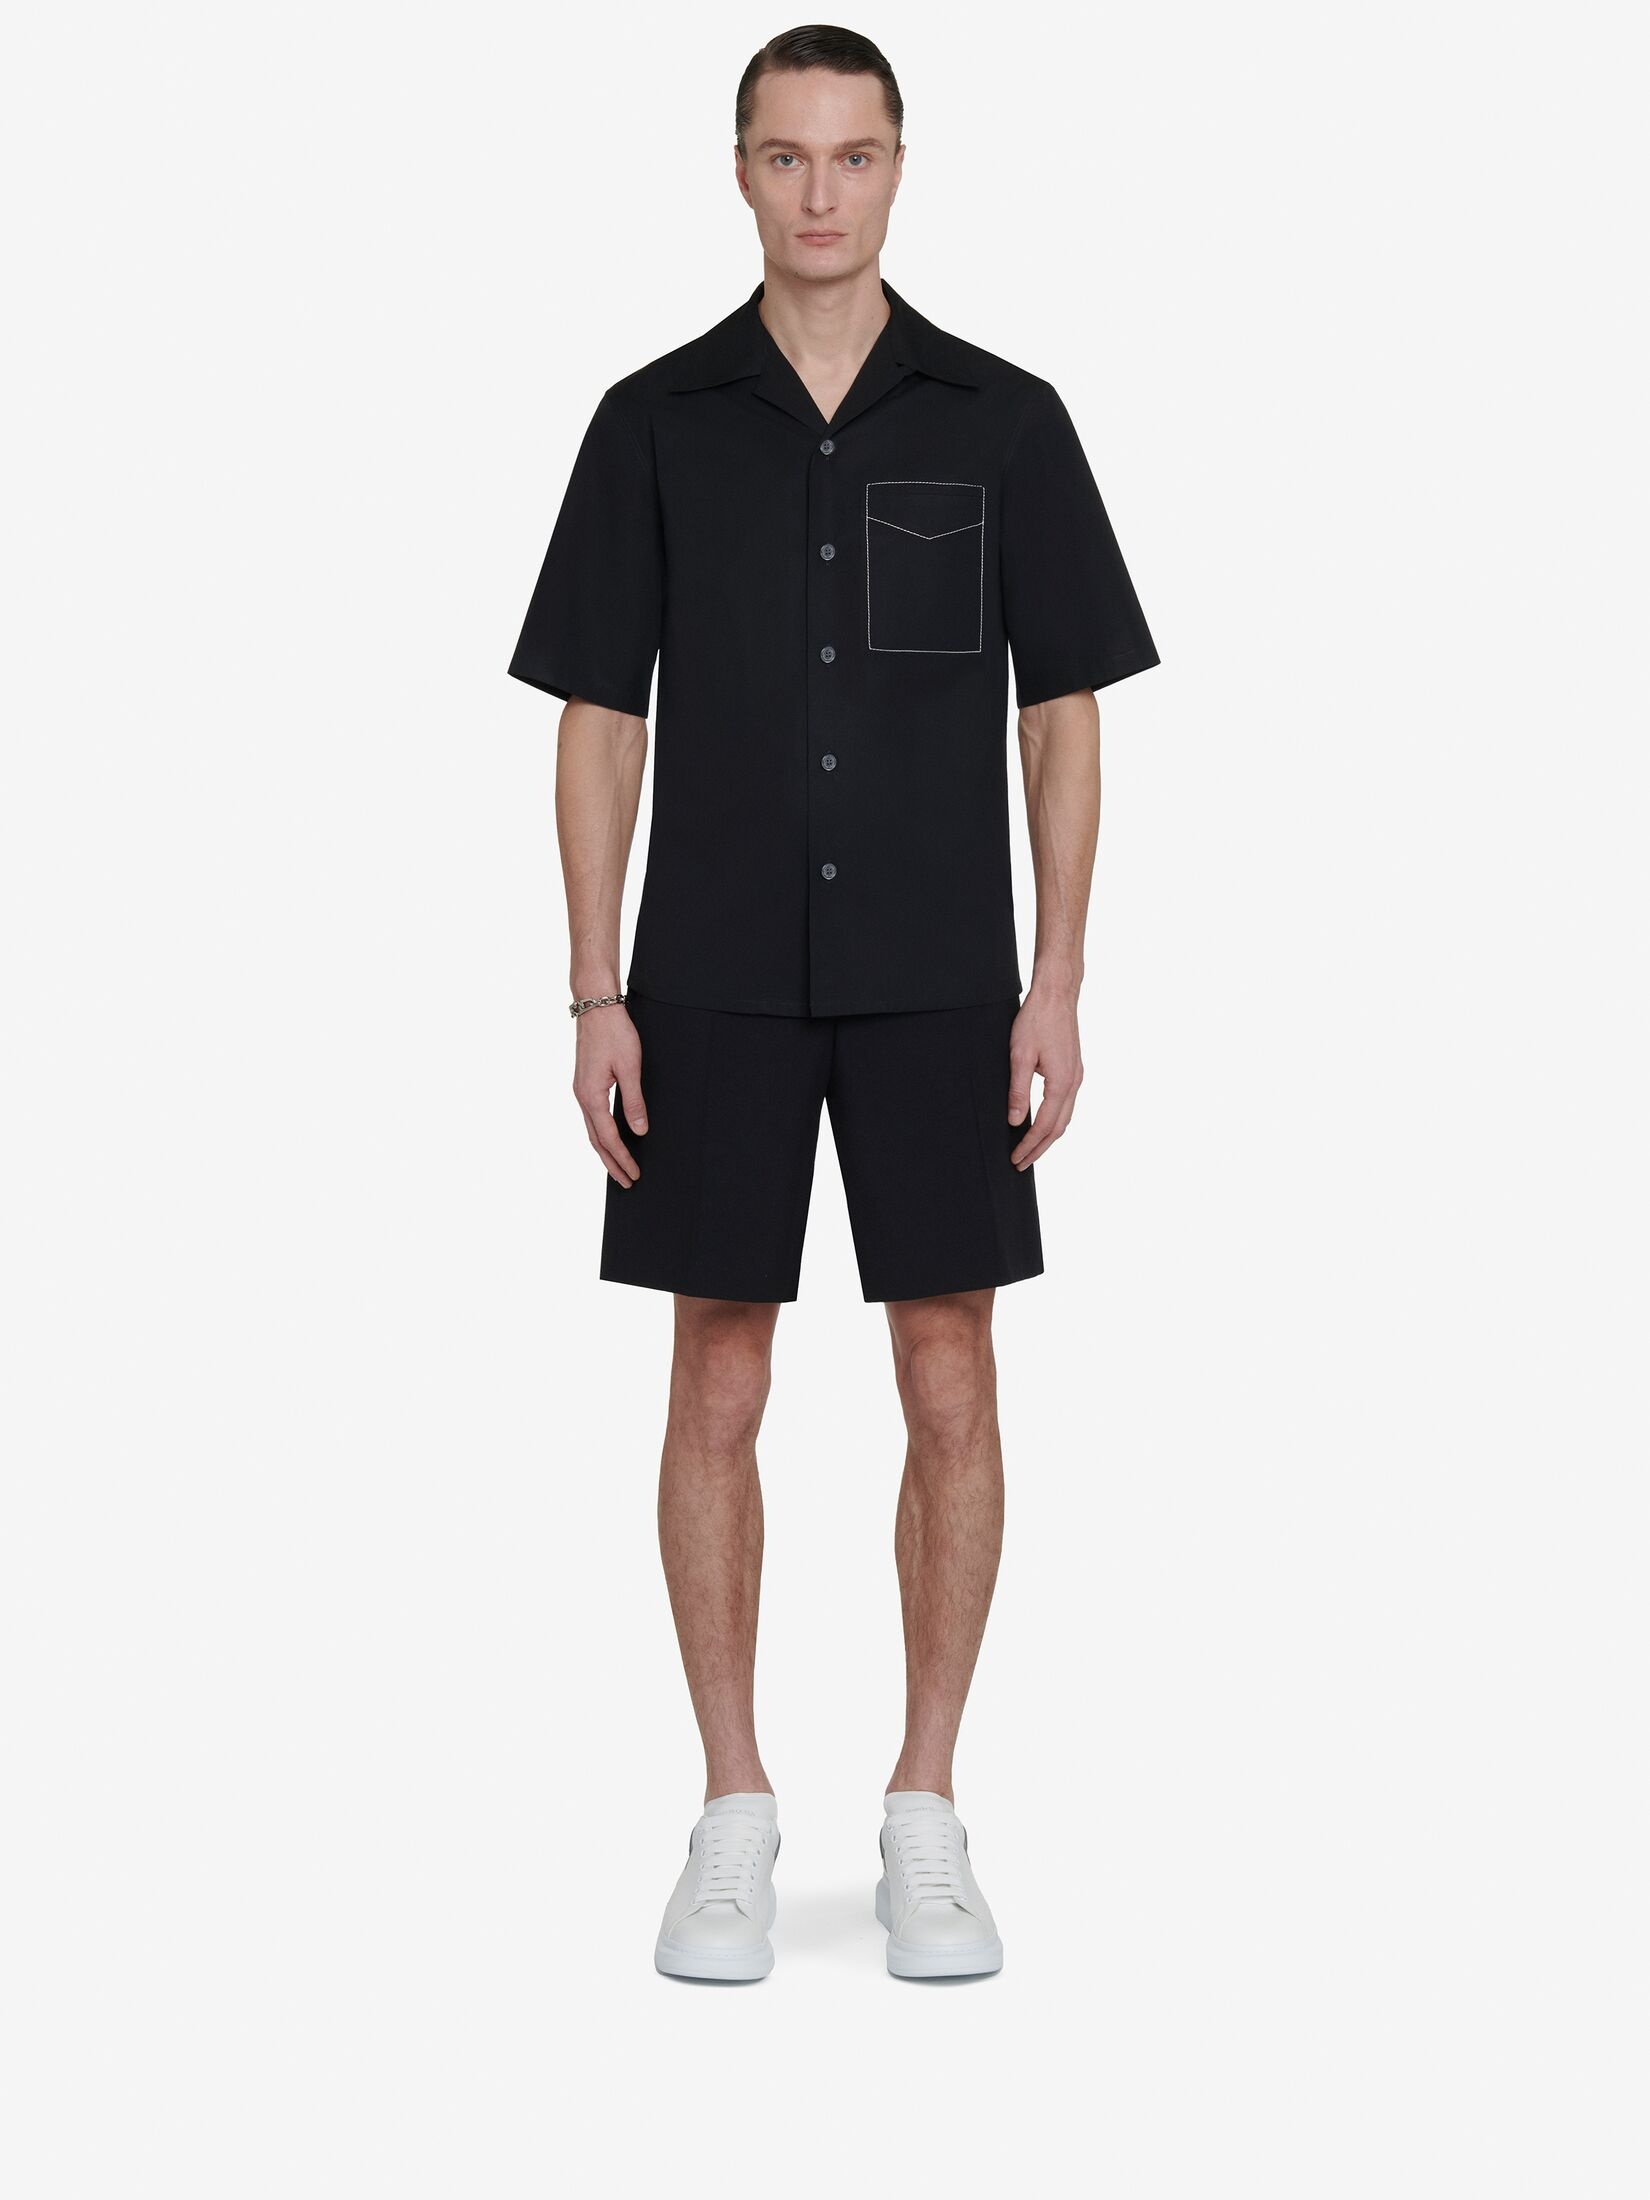 Men's Contrast Stitch Hawaiian Shirt in Black - 2